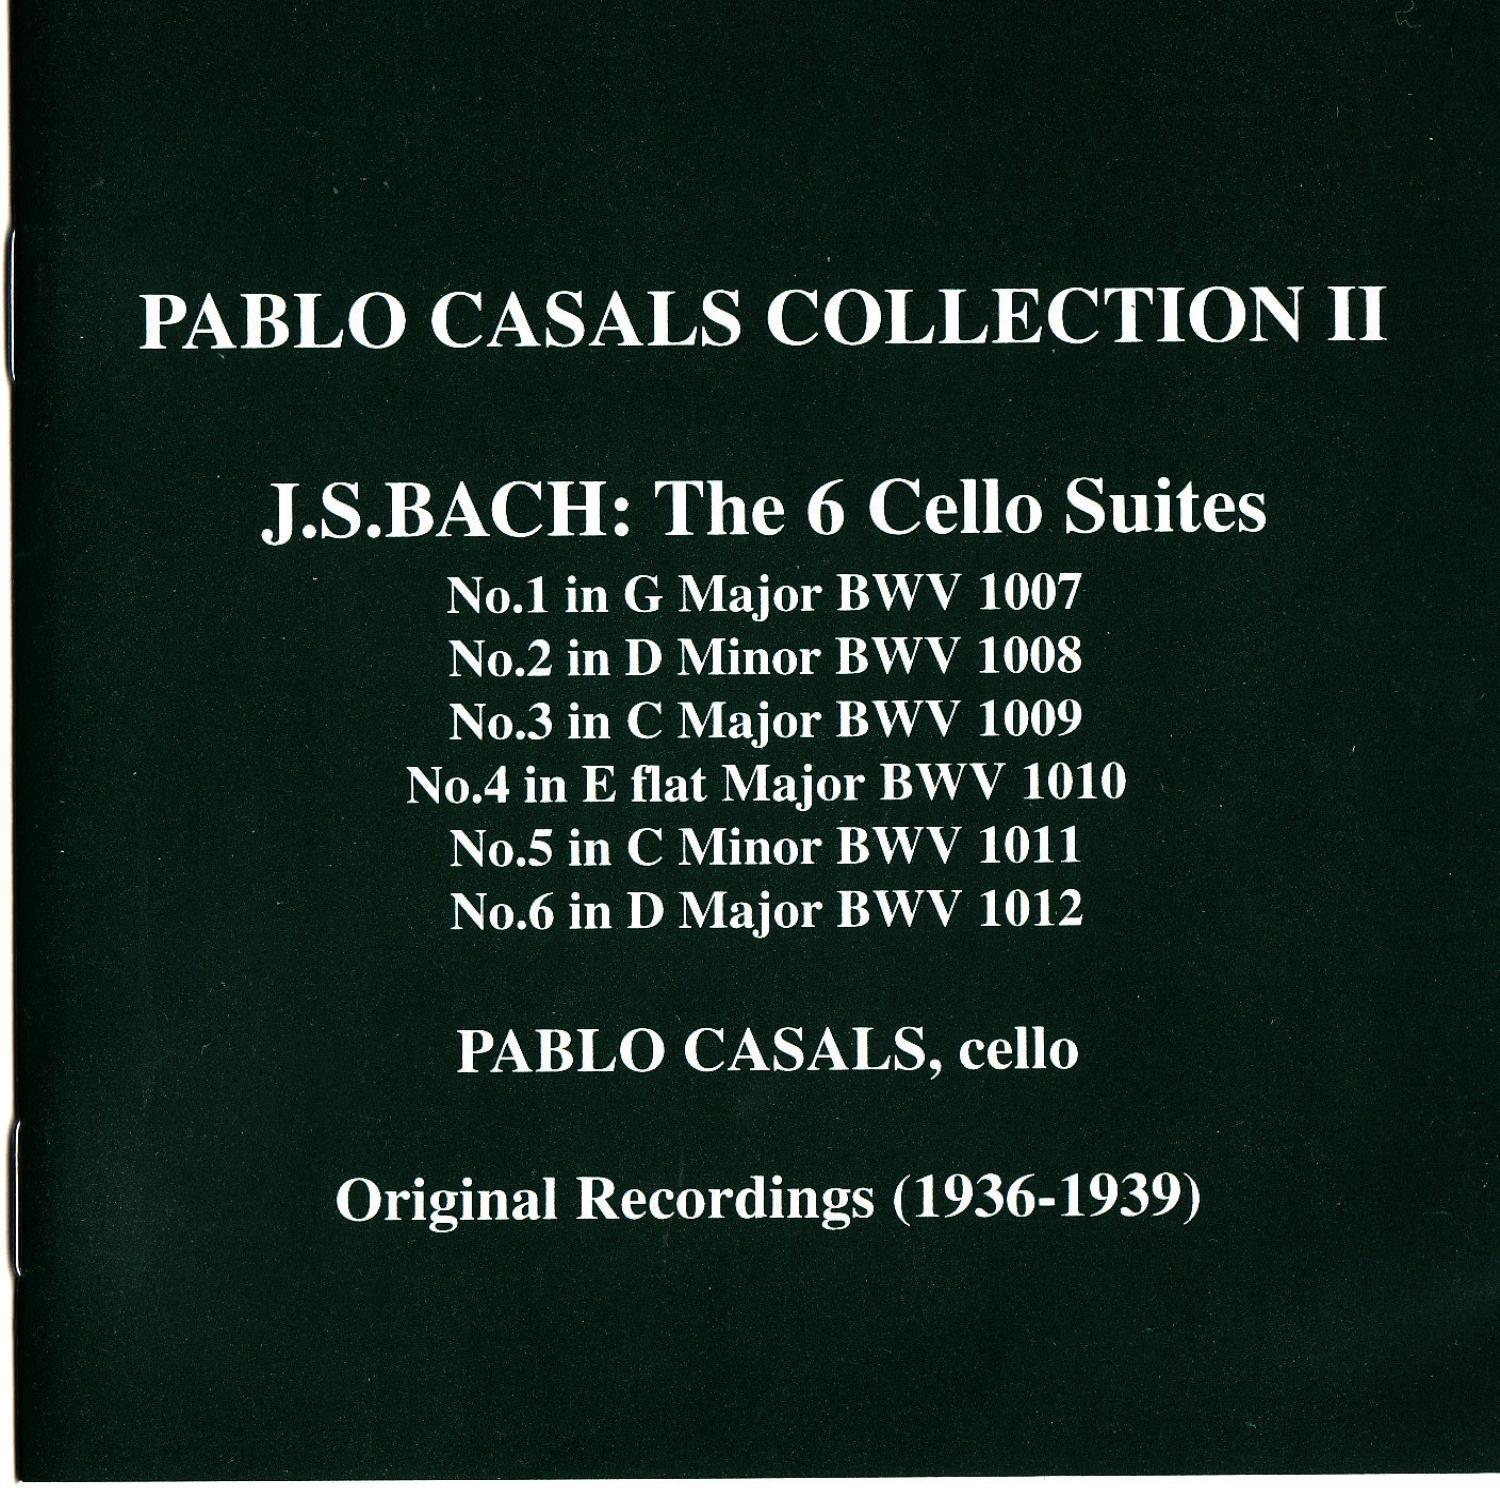 Pablo Casals Collection II